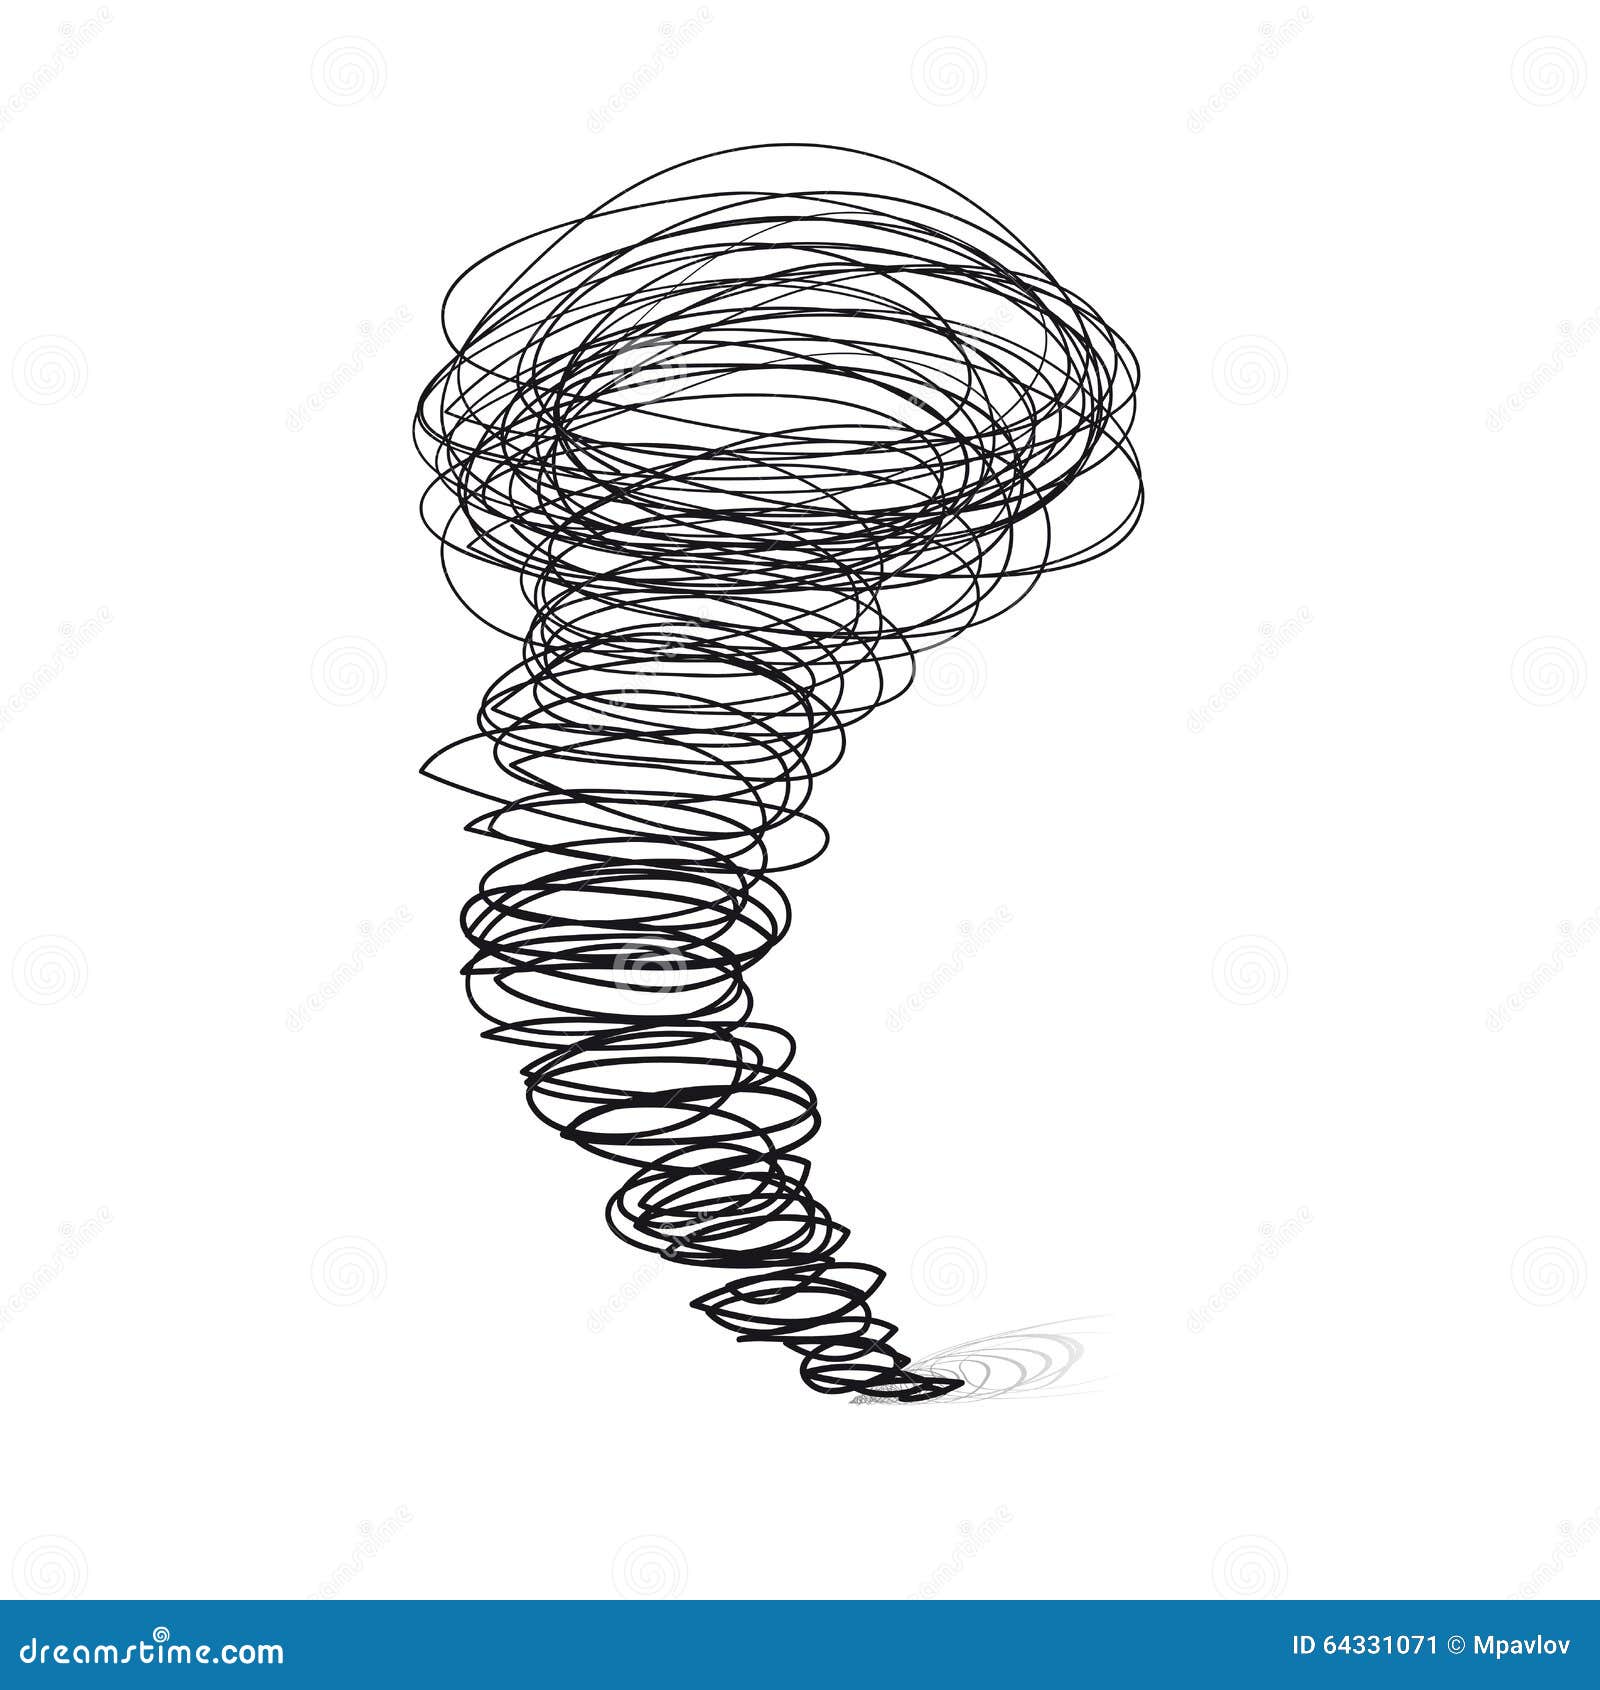  hand-drawn s. cyclone tornado